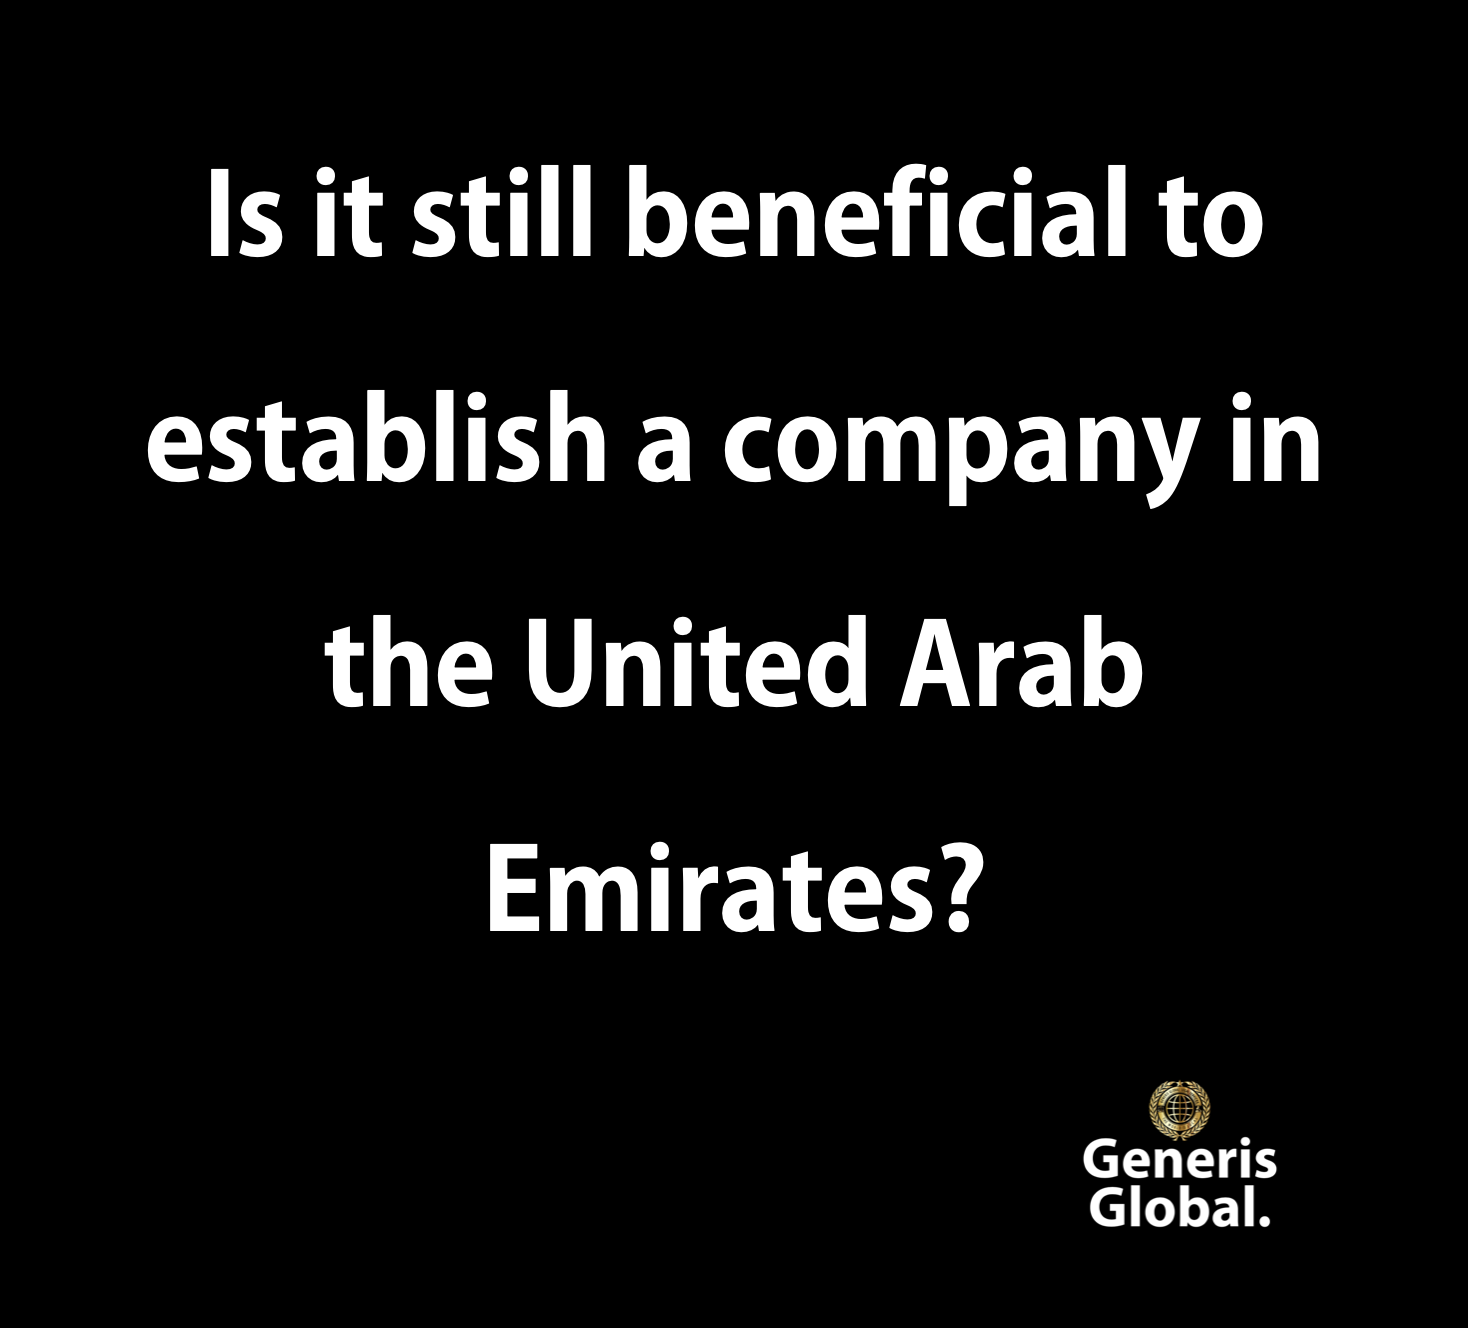 establish a company in the United Arab Emirates